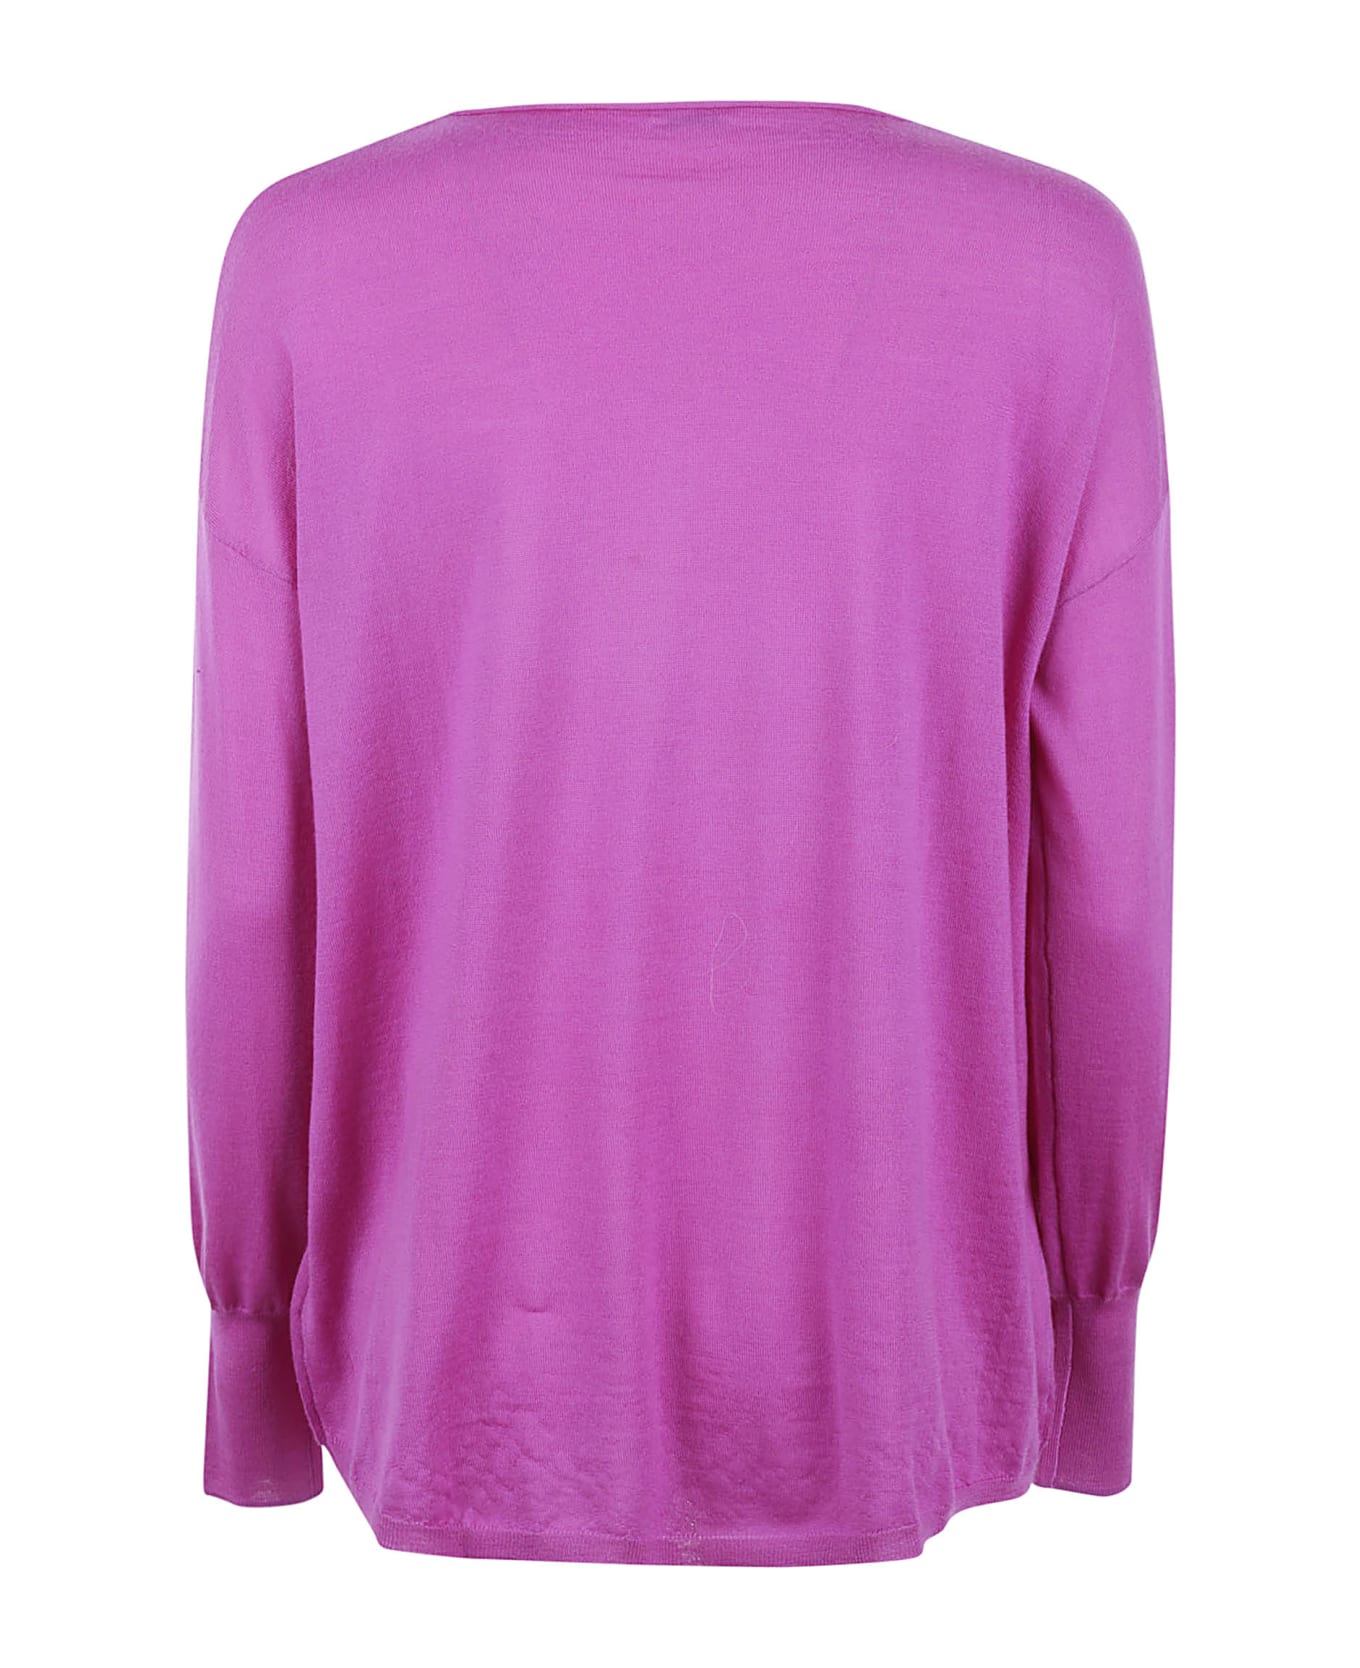 Aspesi Slim Fit Plain Sweater - Fuchsia